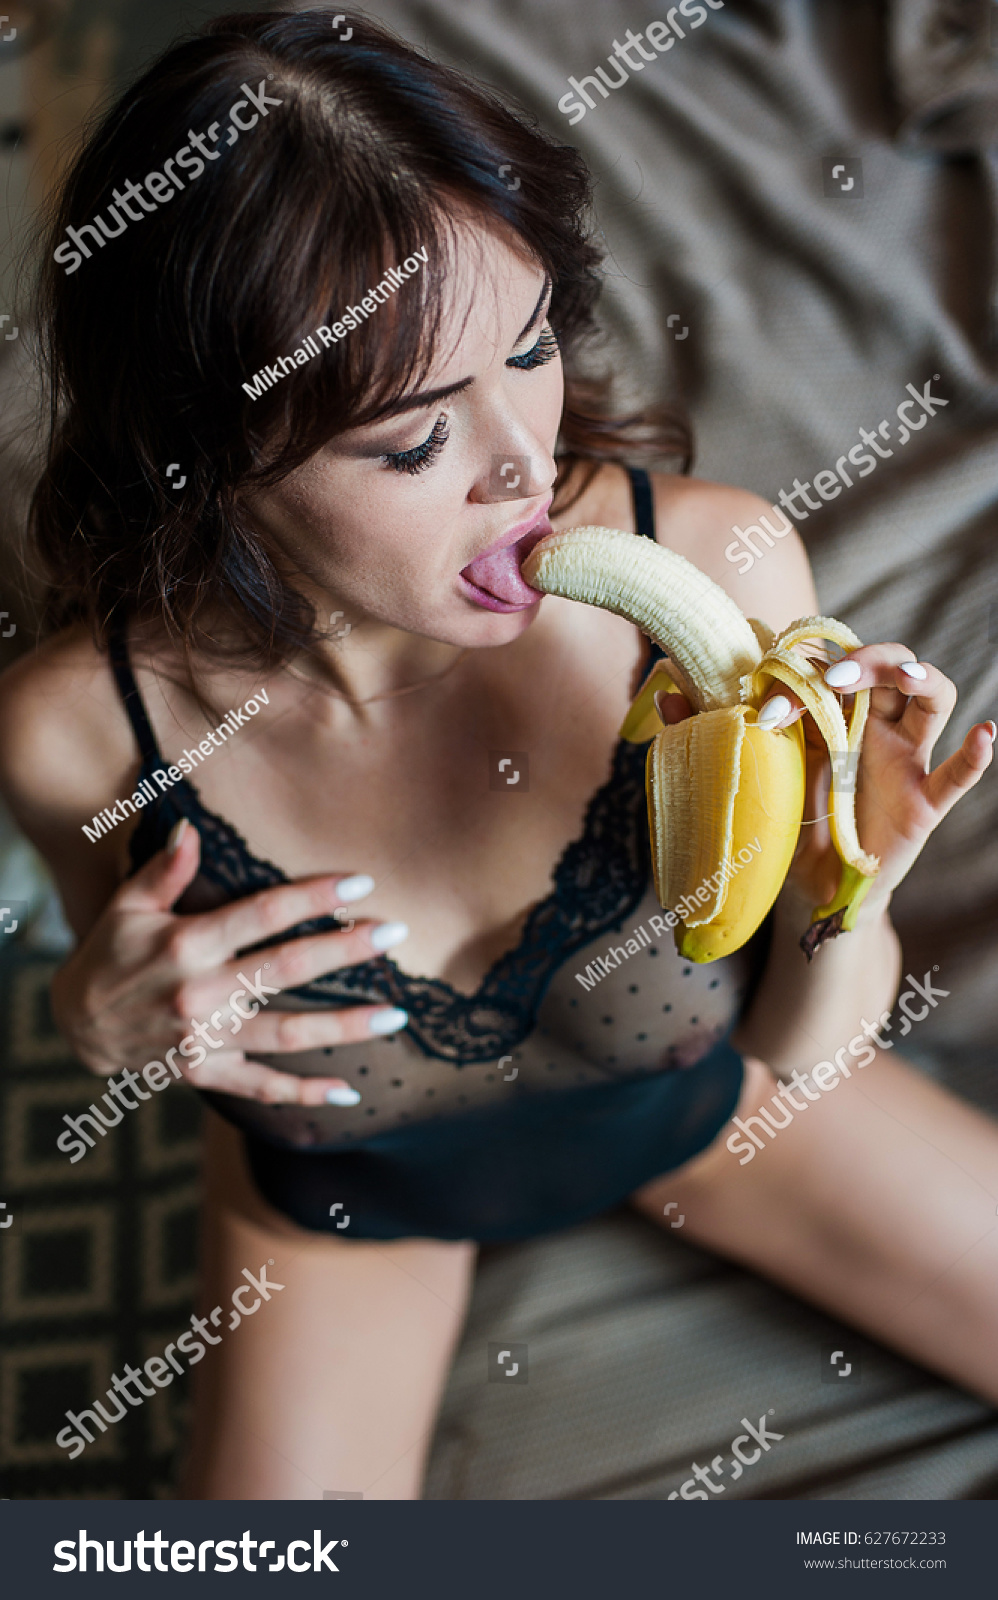 Erotic eating